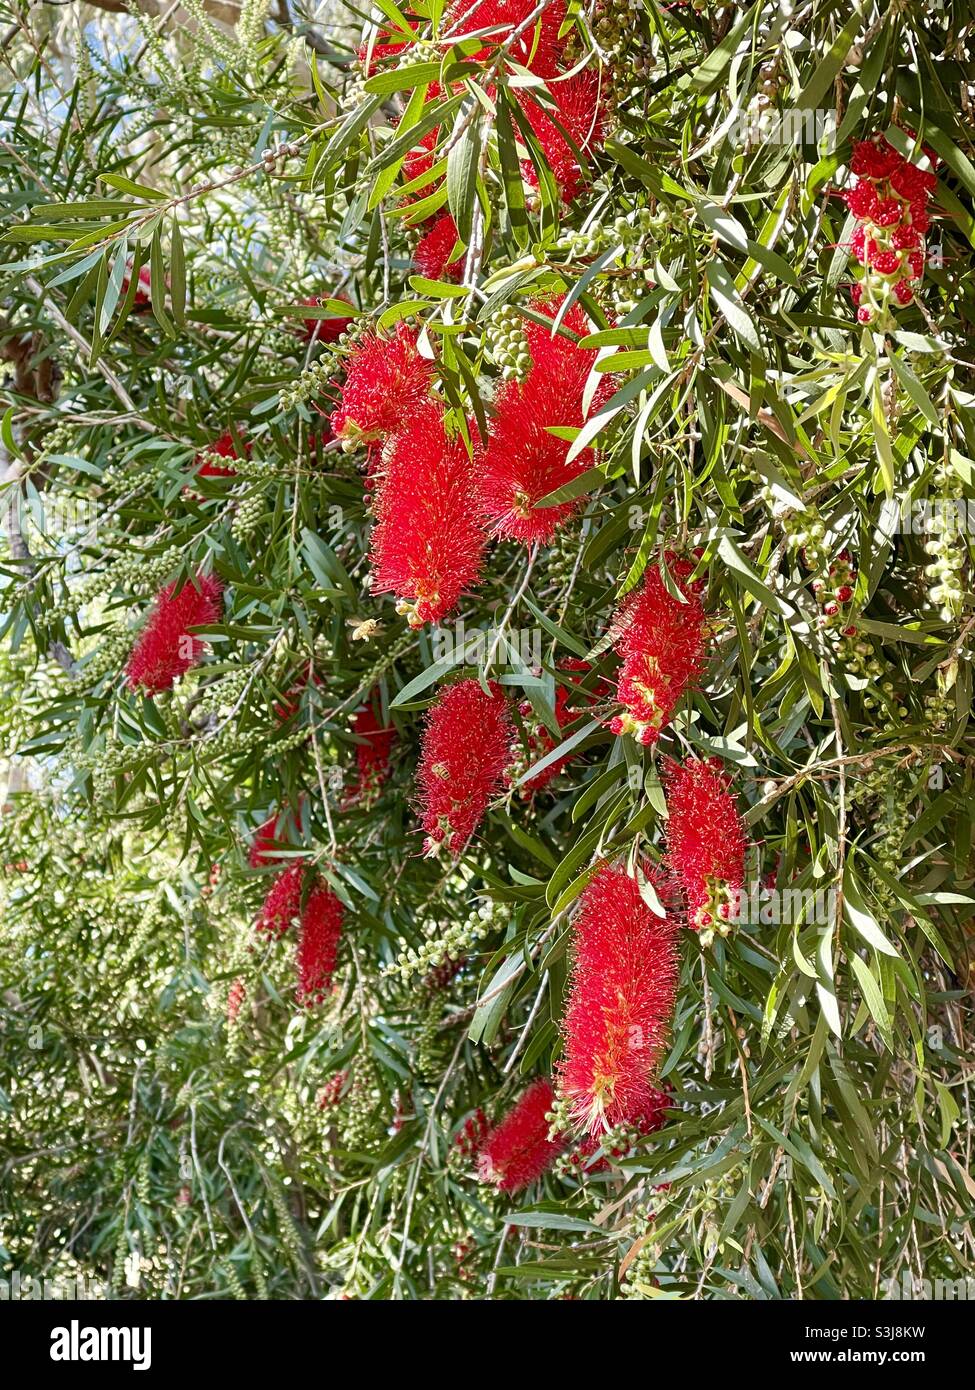 Bottlebrush tree, Melaleuca viminalis, flowering red flowers in spring Stock Photo